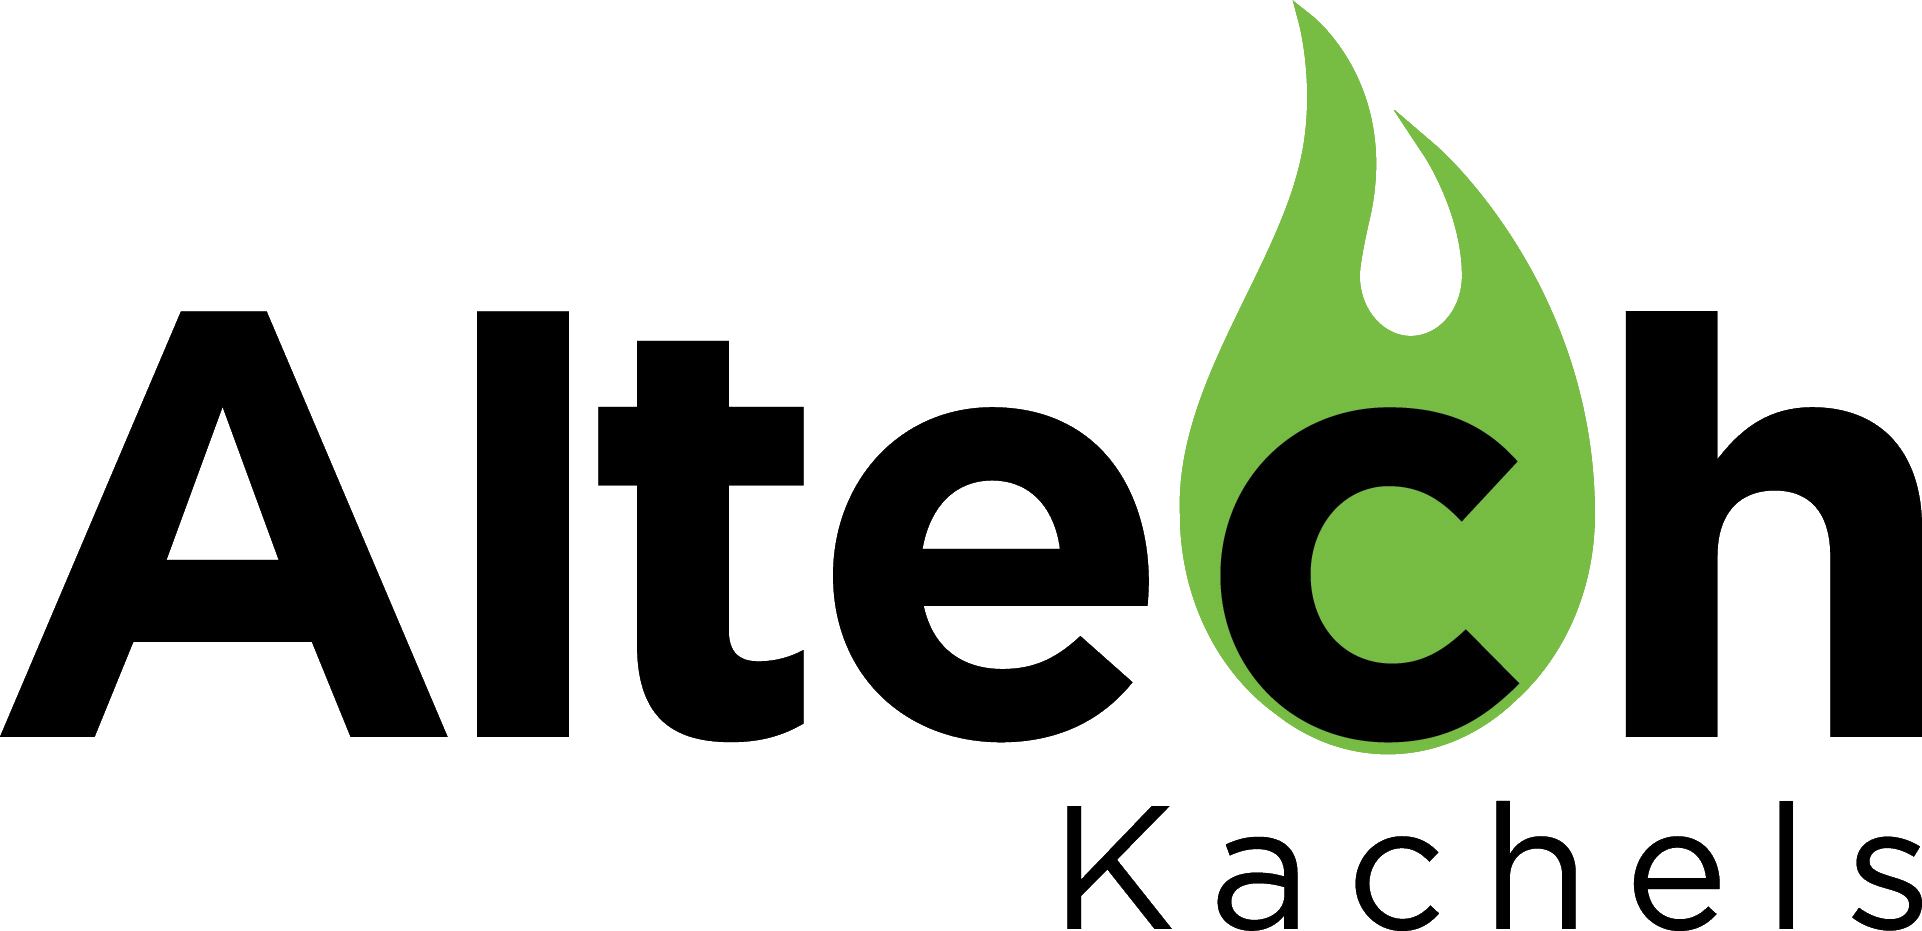 Altech logo